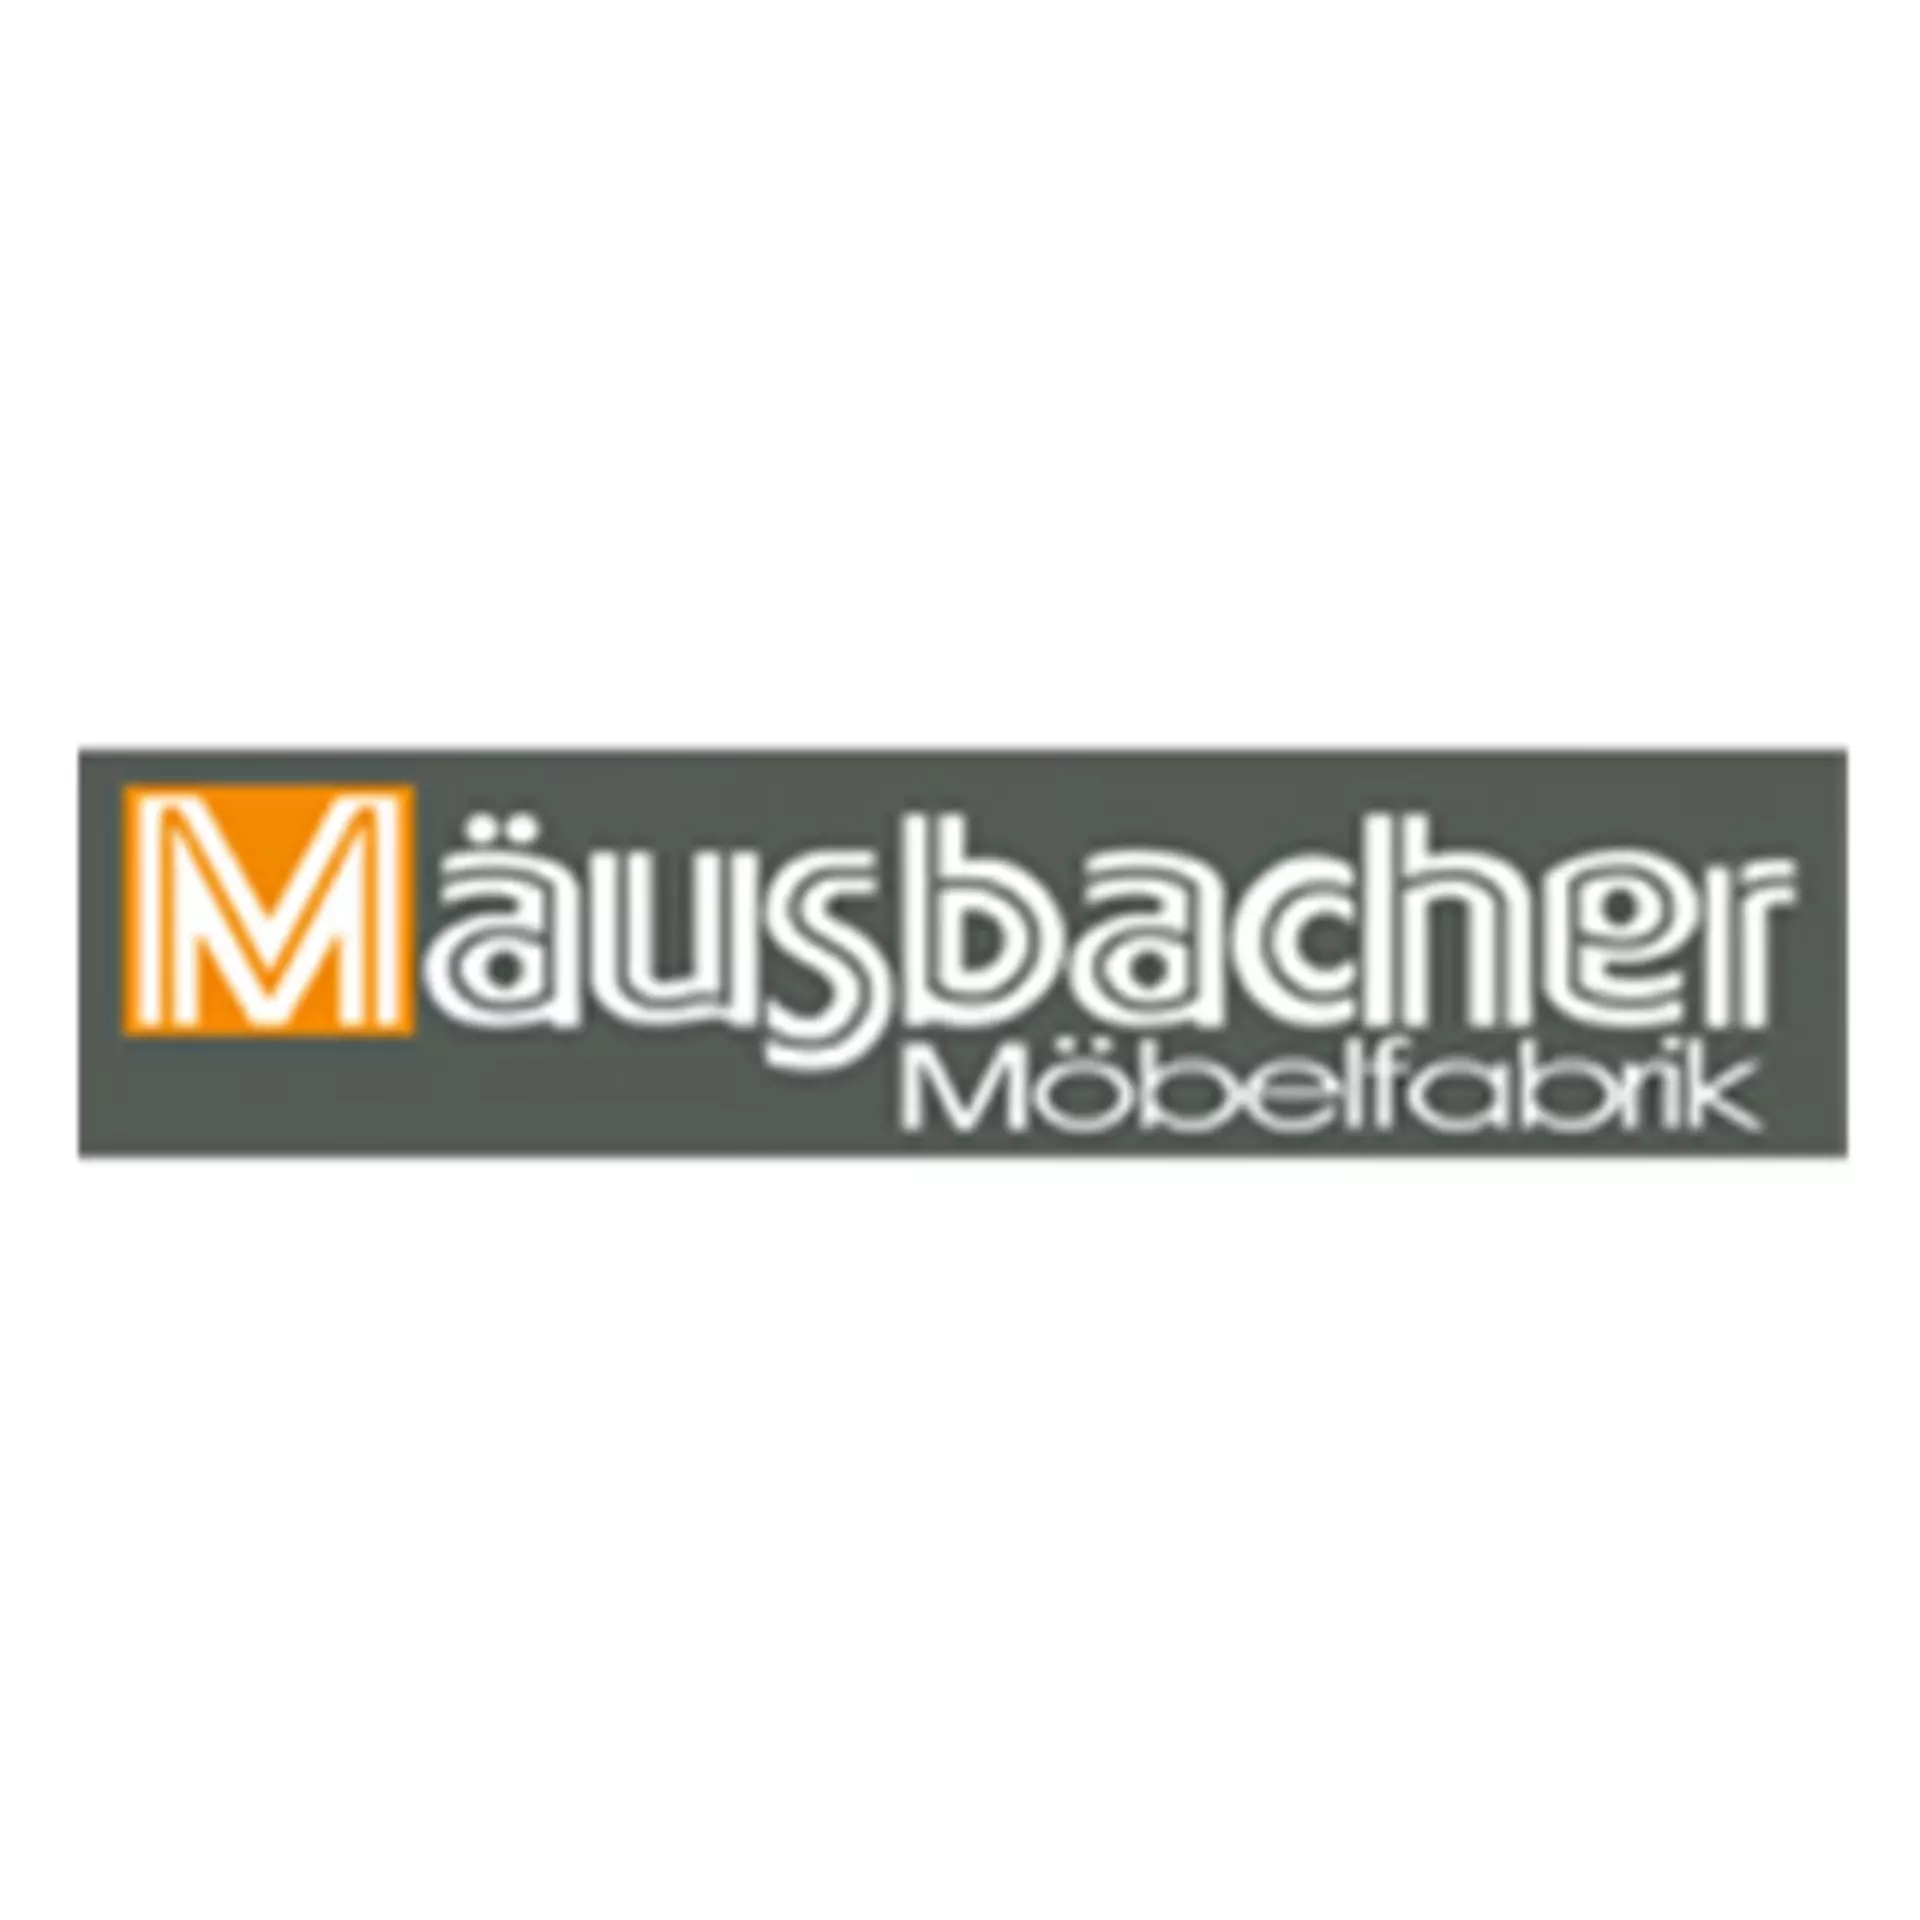 Mäusbacher-Möbelfabrik Logo